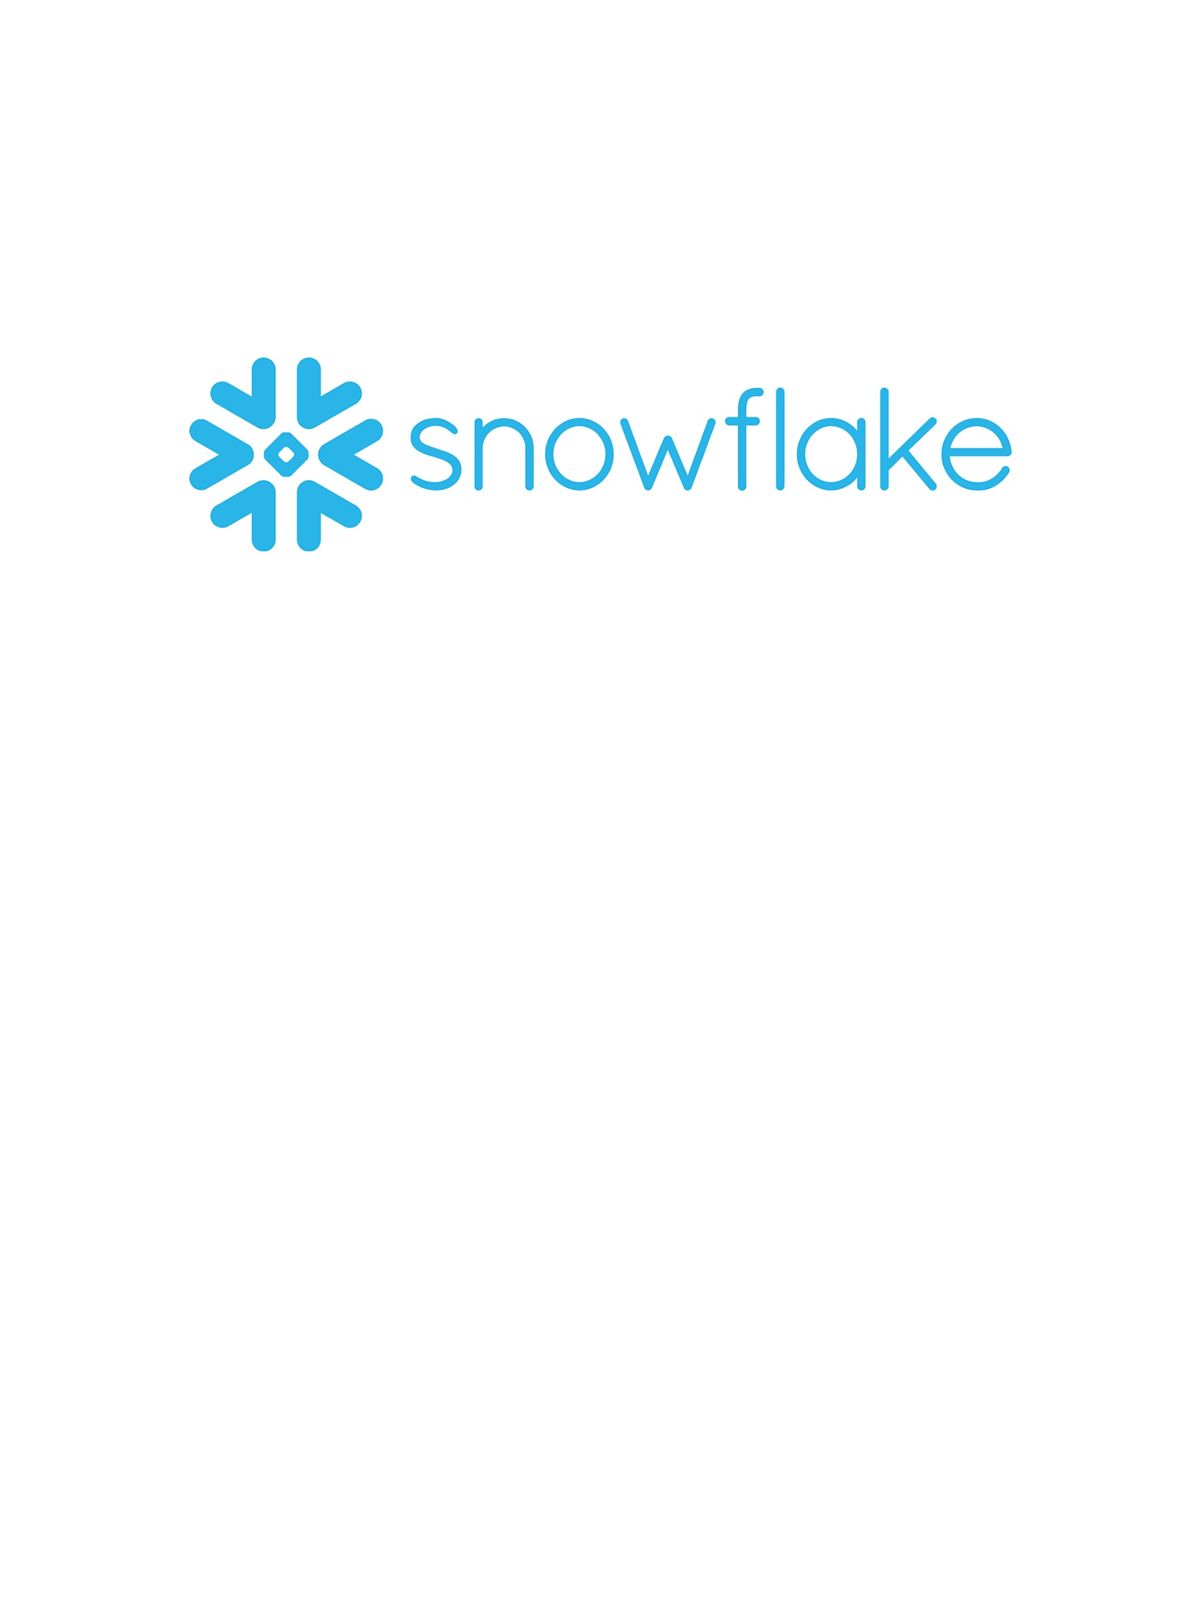 4 Weeks Snowflake cloud data platform Training Course Phoenixville